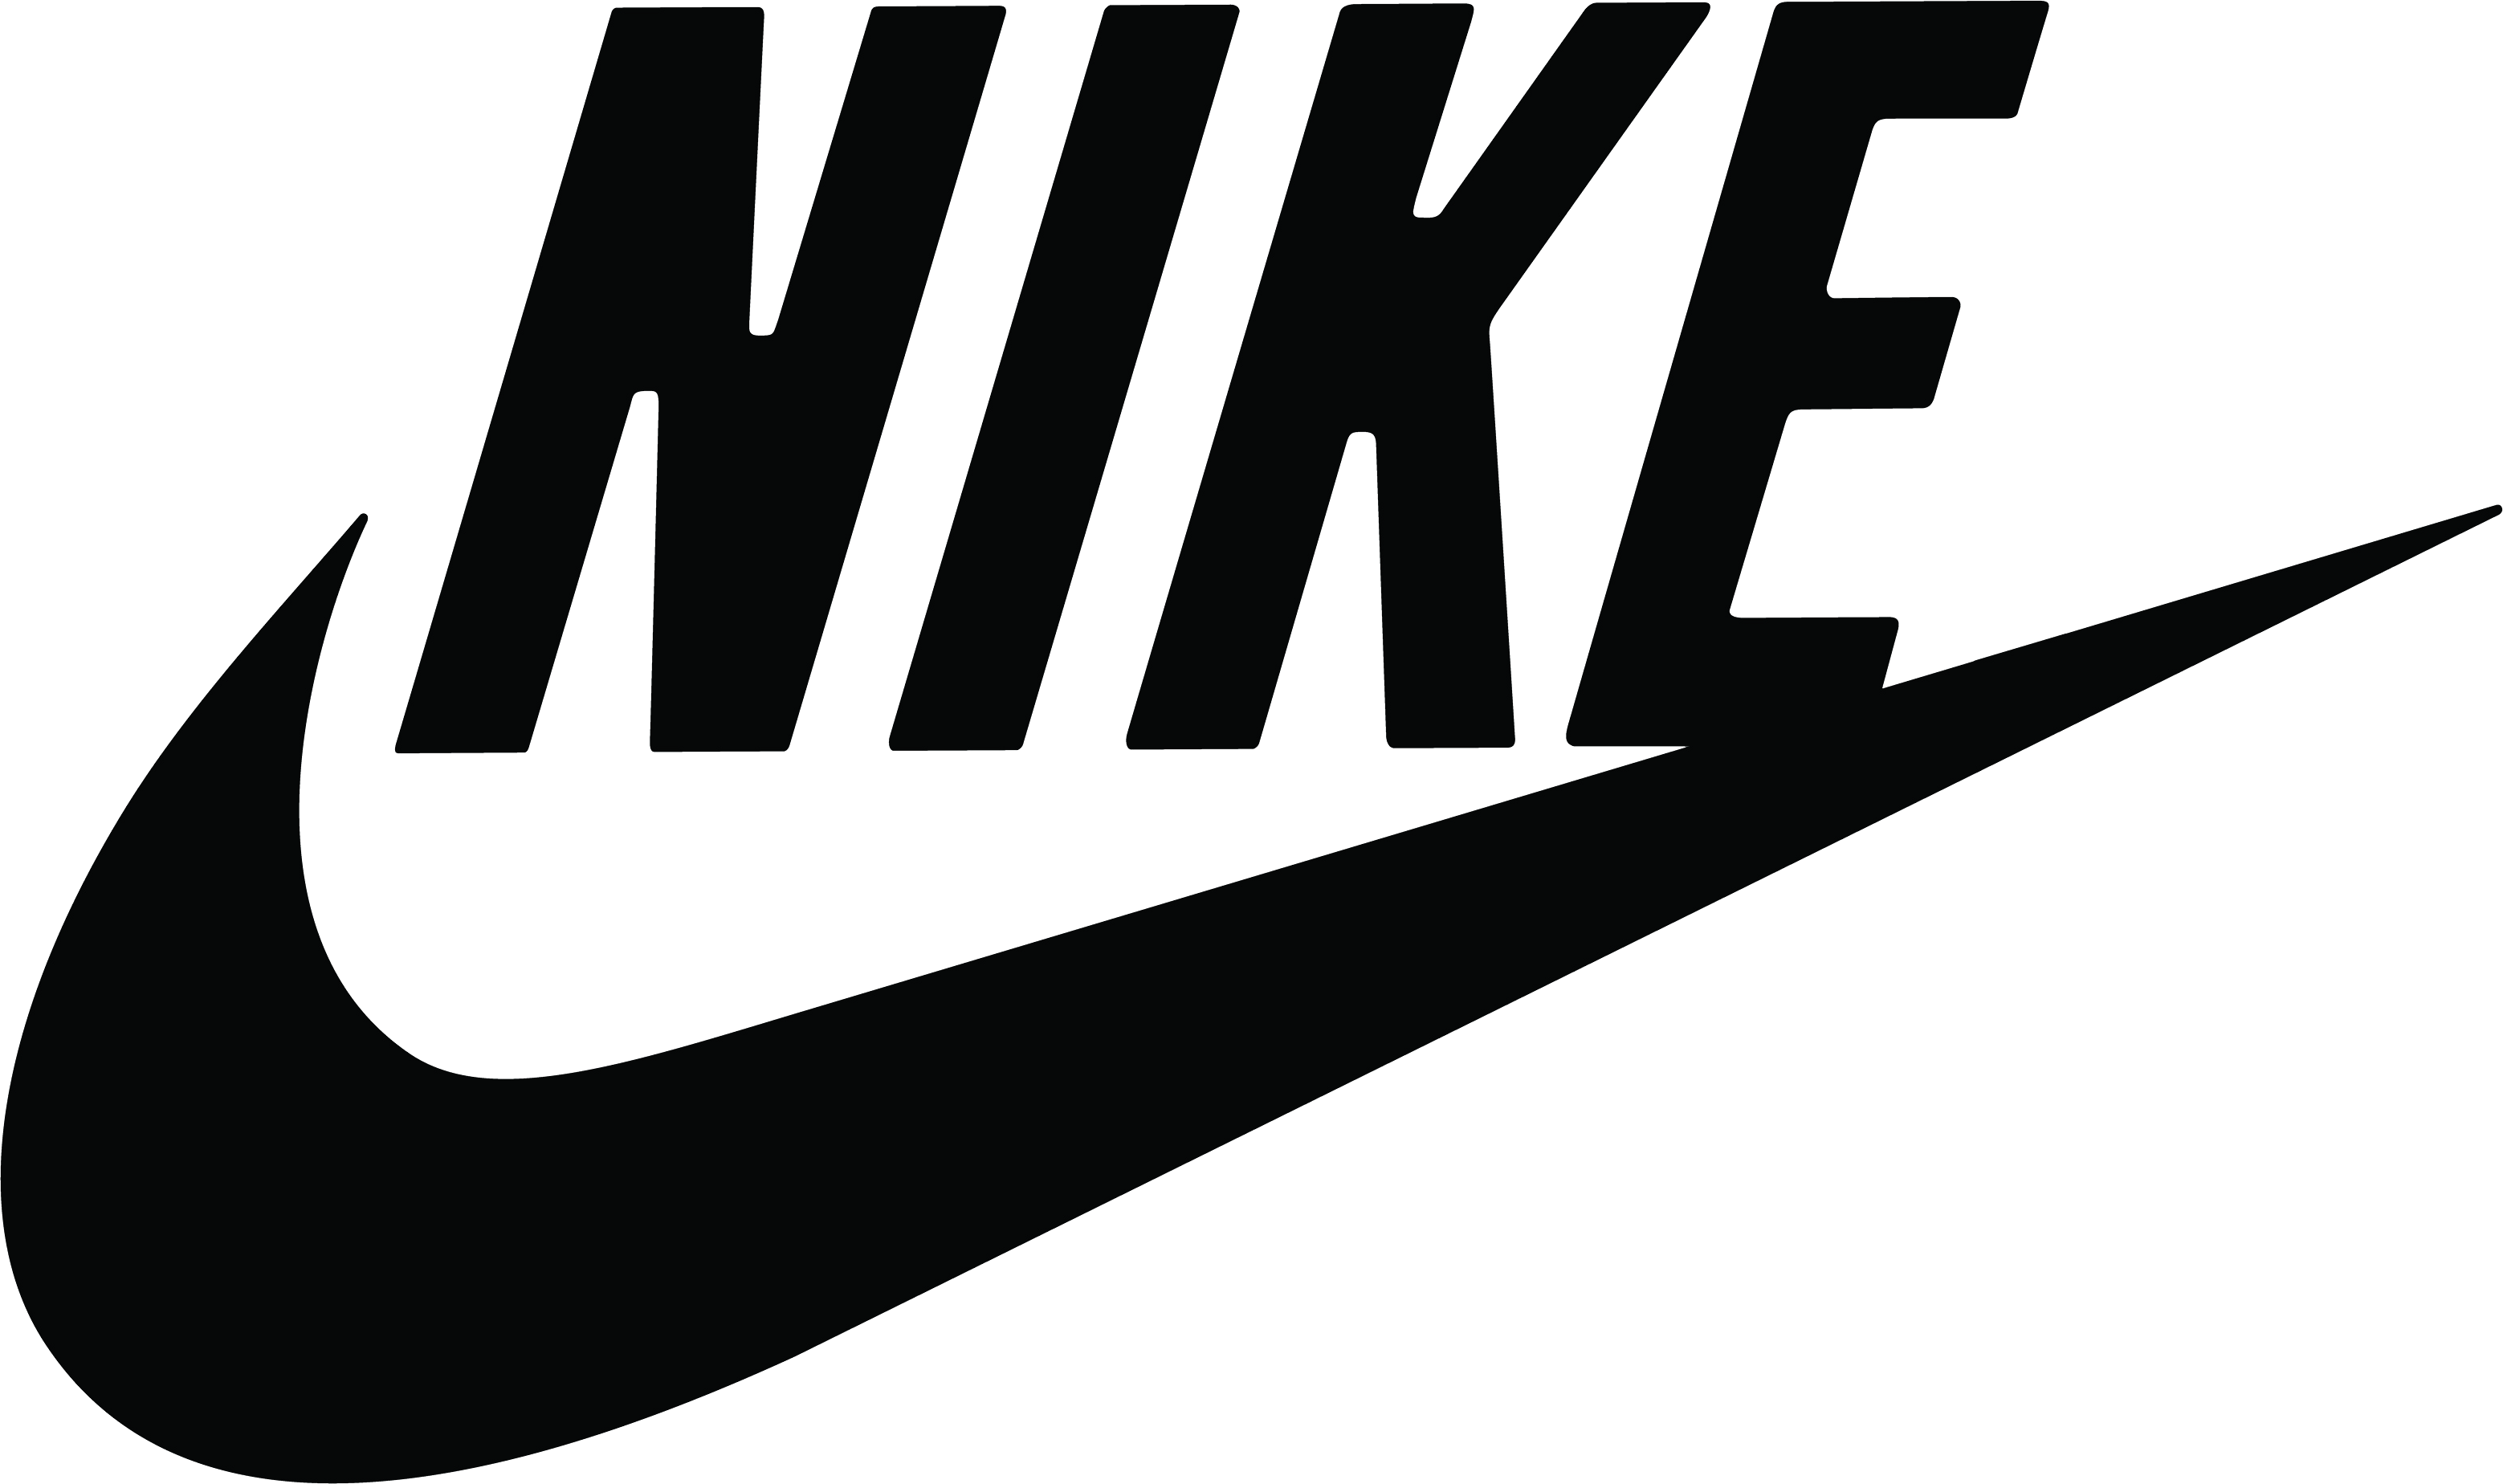 Library of nike logo black image download png files ... - Funny Nike Logos